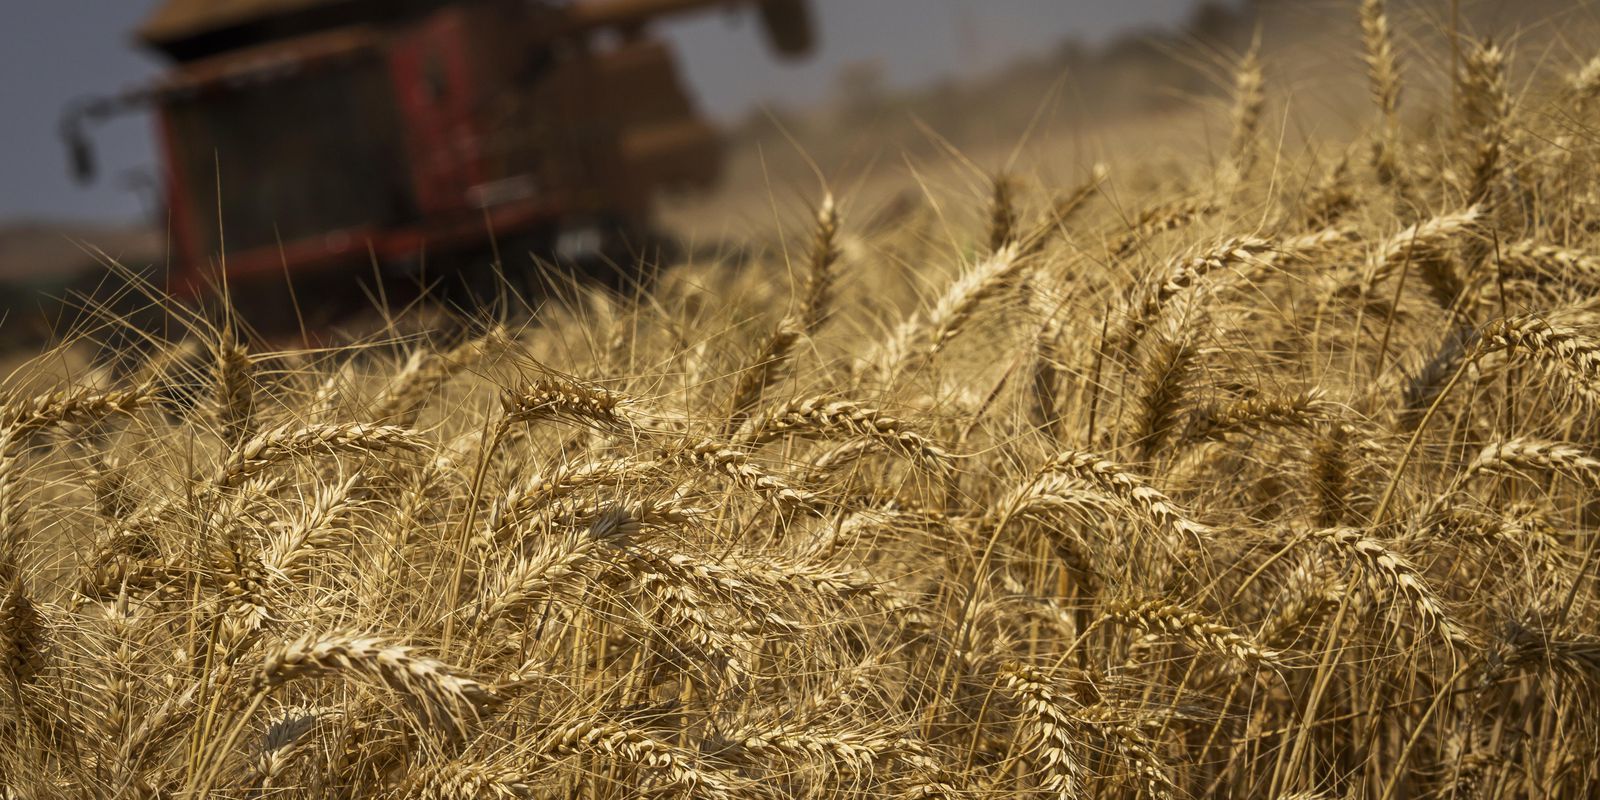 Conab estimates grain harvest at 313 million tons